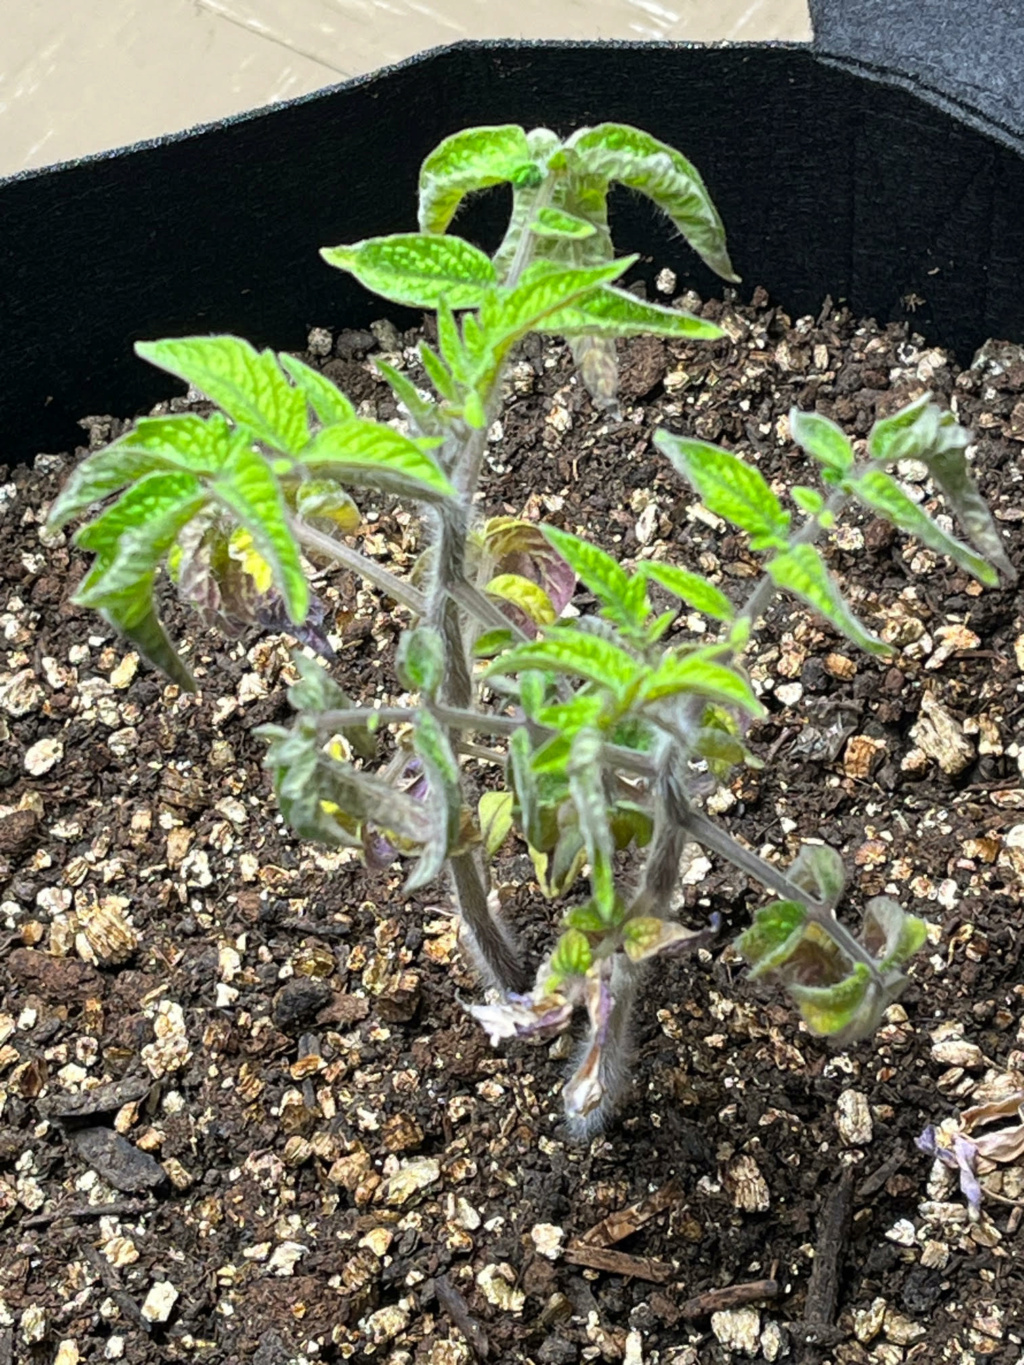 new to SFG, need help plants look bad Cherry12